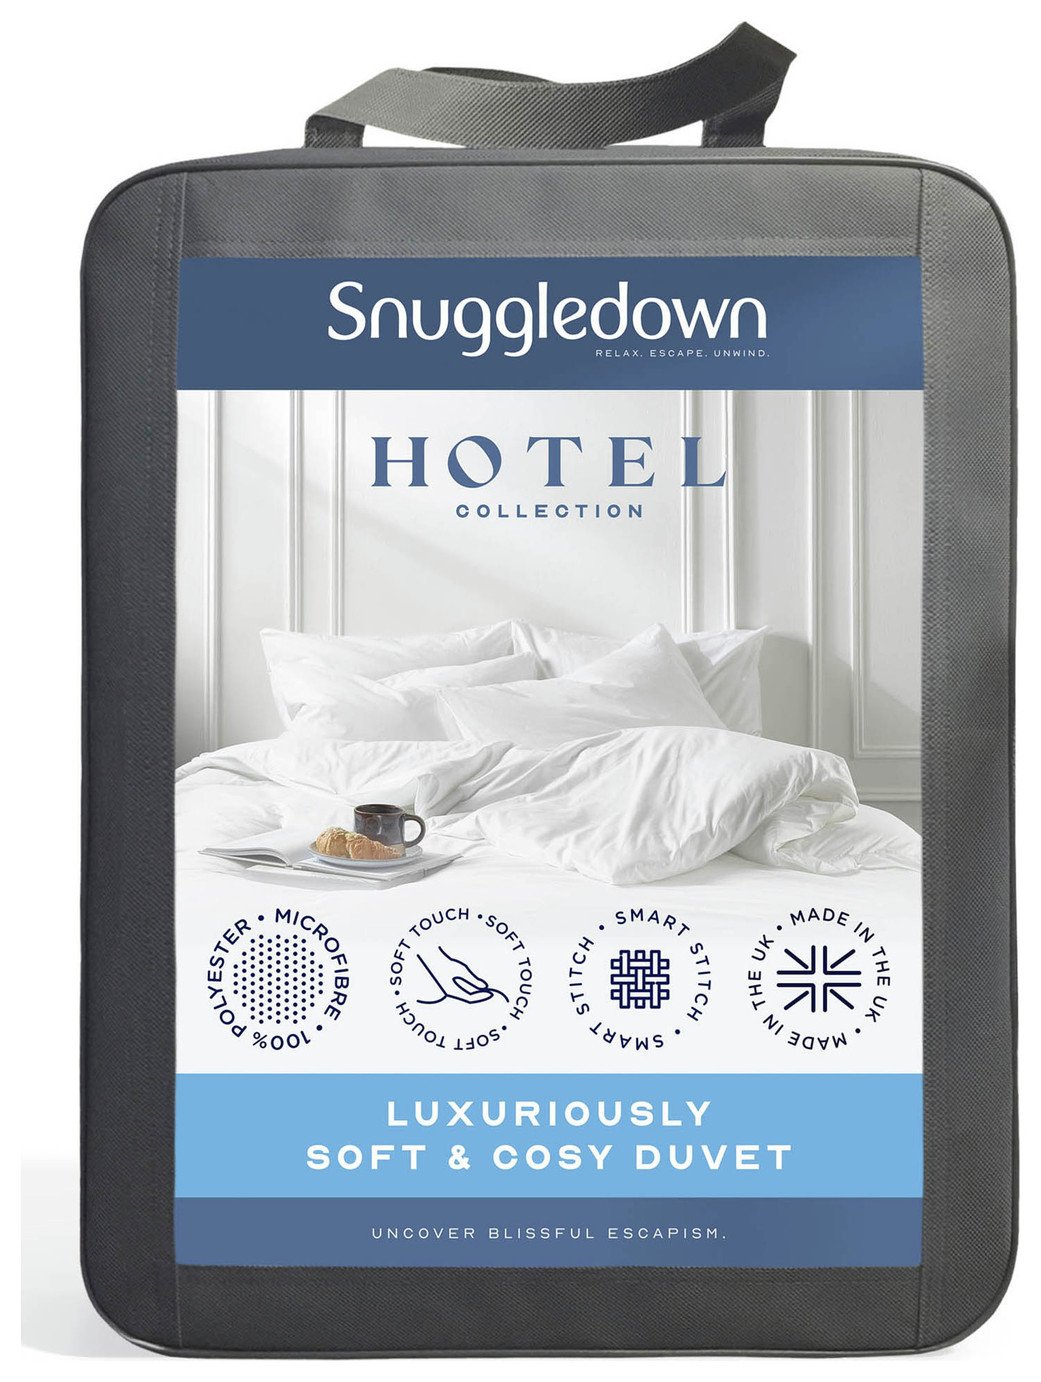 Snuggledown Luxurious Hotel 10.5 Tog Duvet - Superking